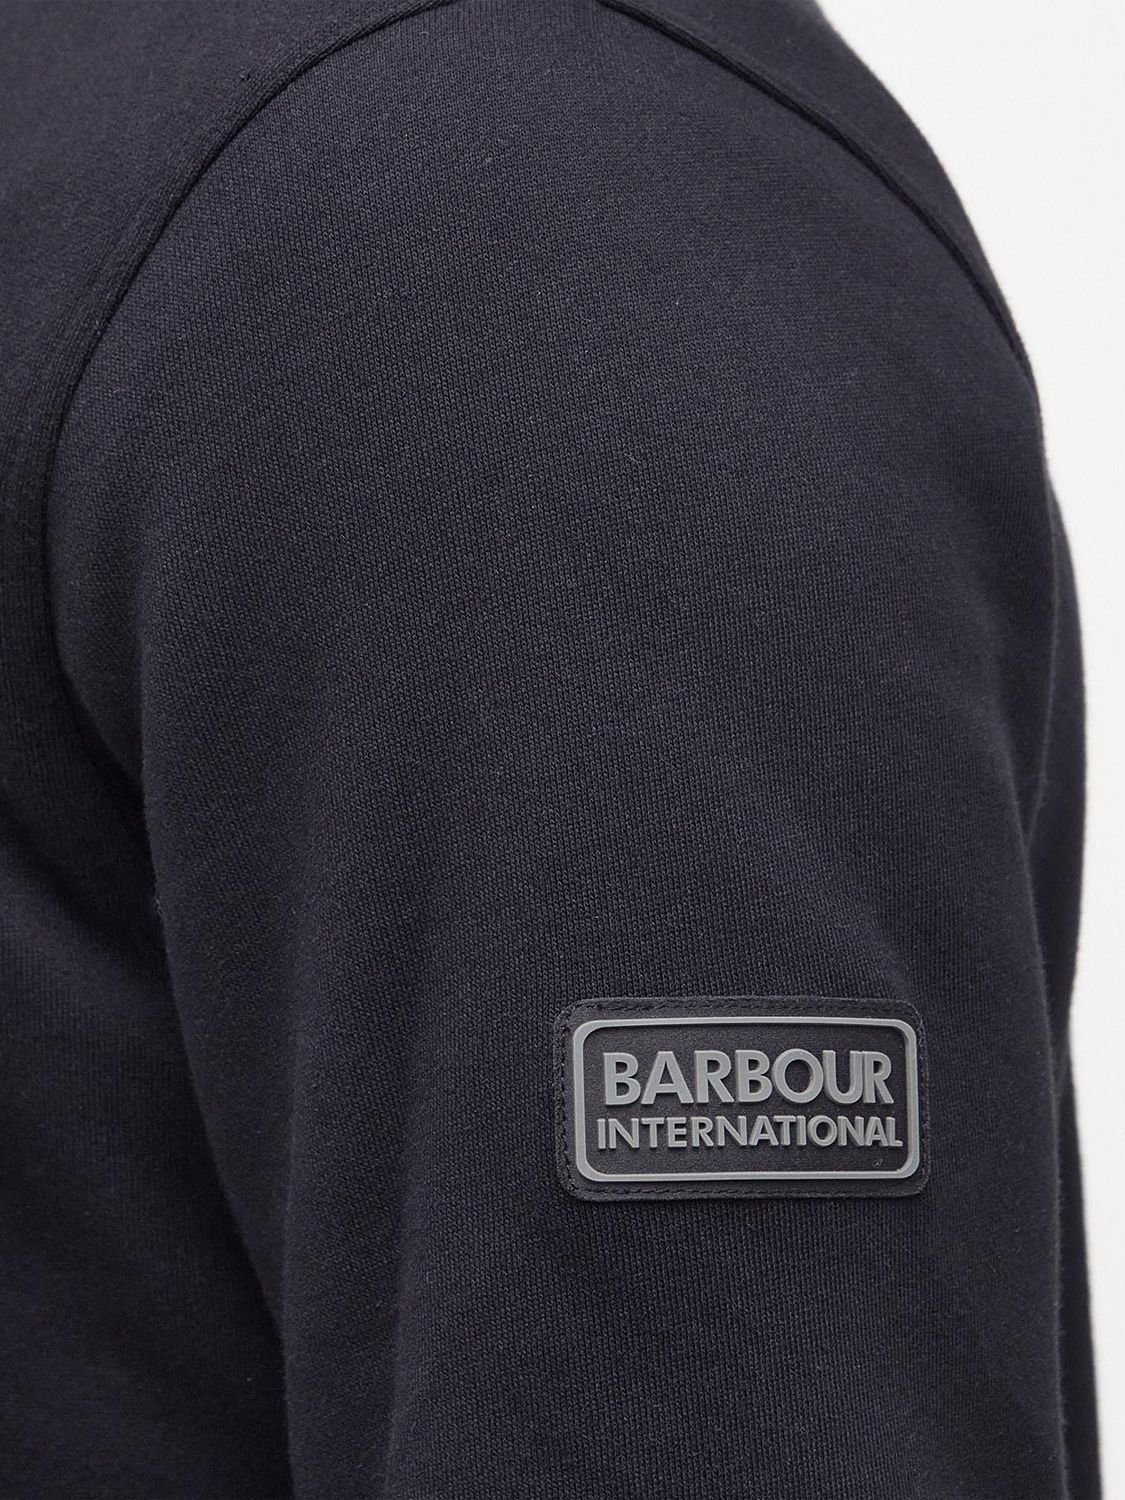 Barbour International Half Zip Jumper, Black at John Lewis & Partners